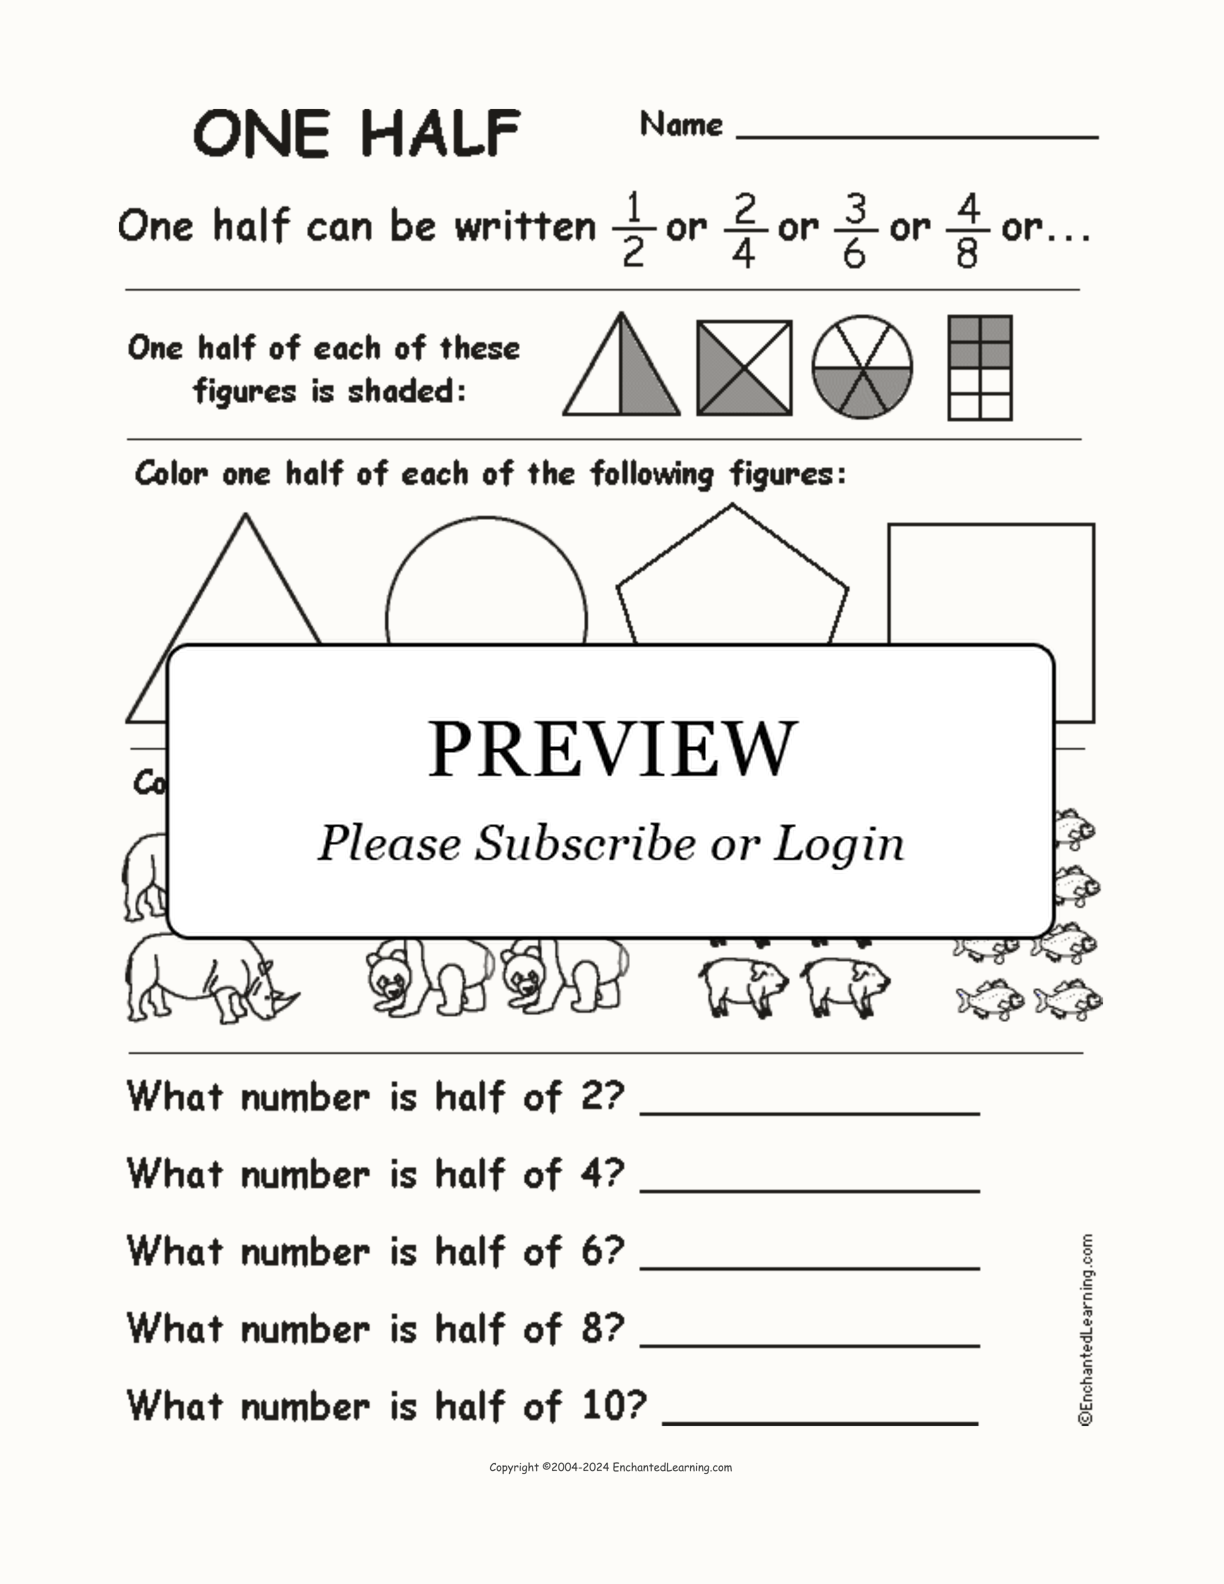 One Half Fractions Worksheet interactive worksheet page 1